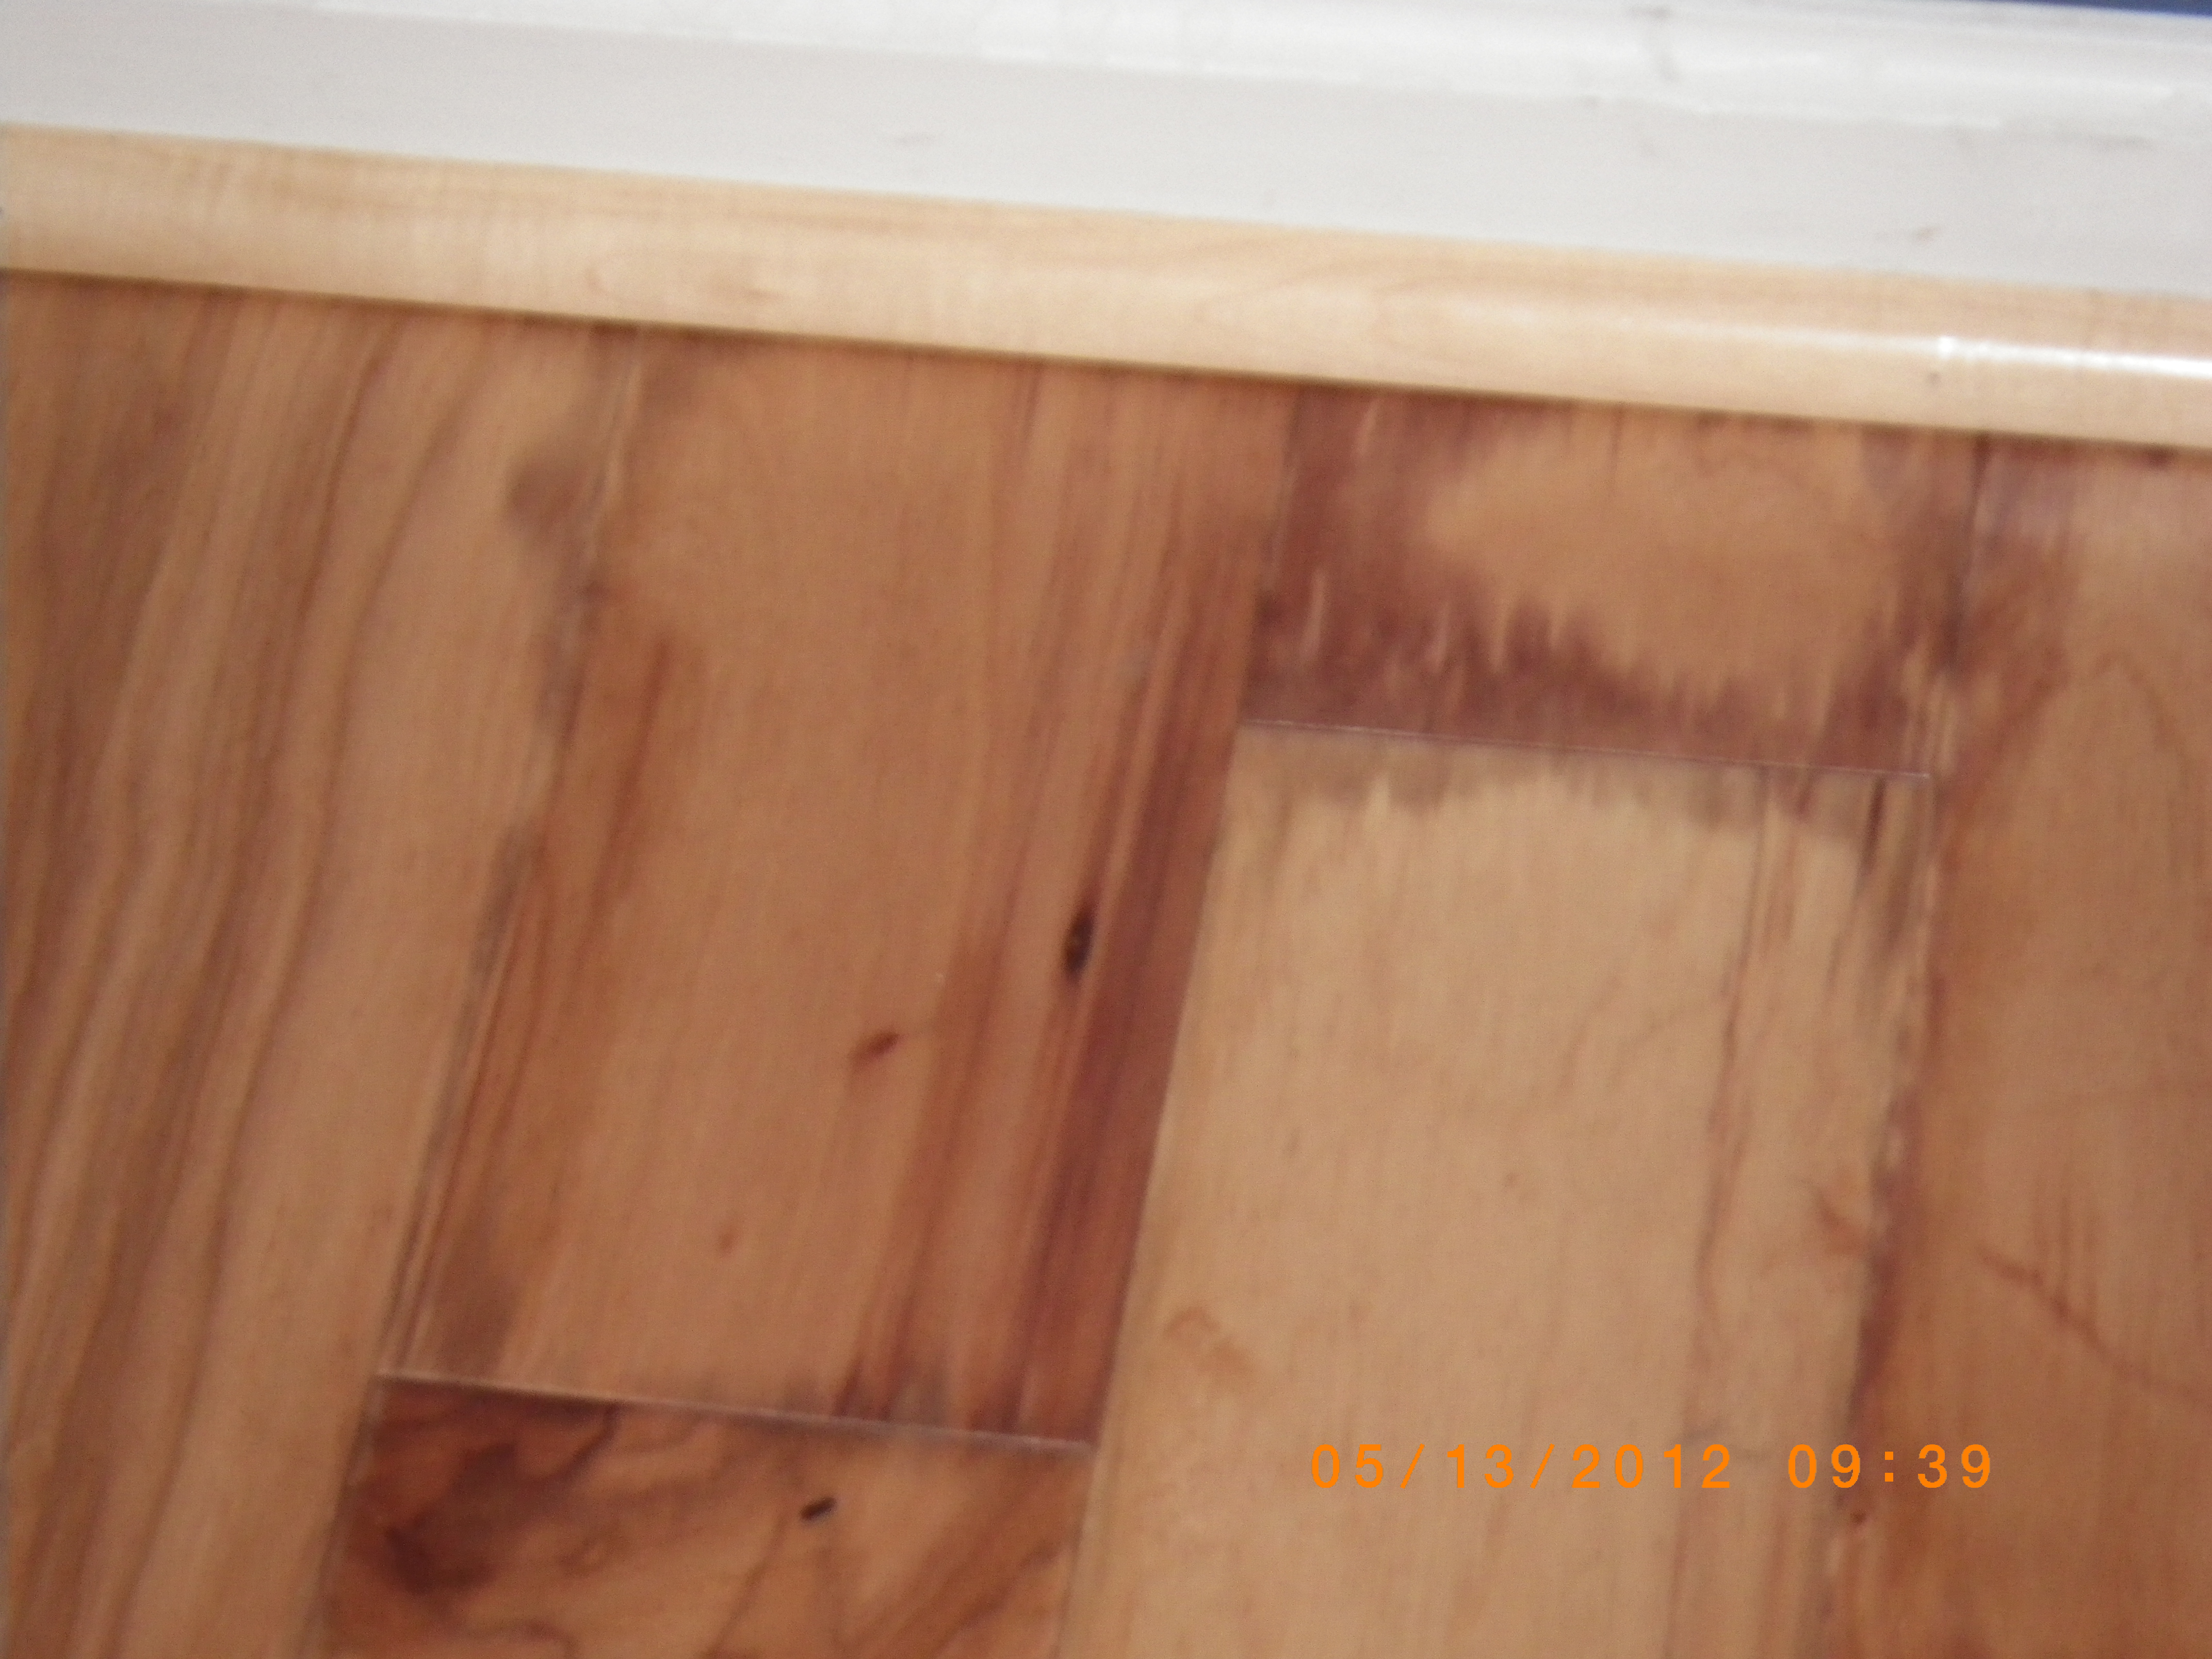 Hardwood Floors, Pictures Of Water Damaged Hardwood Floors